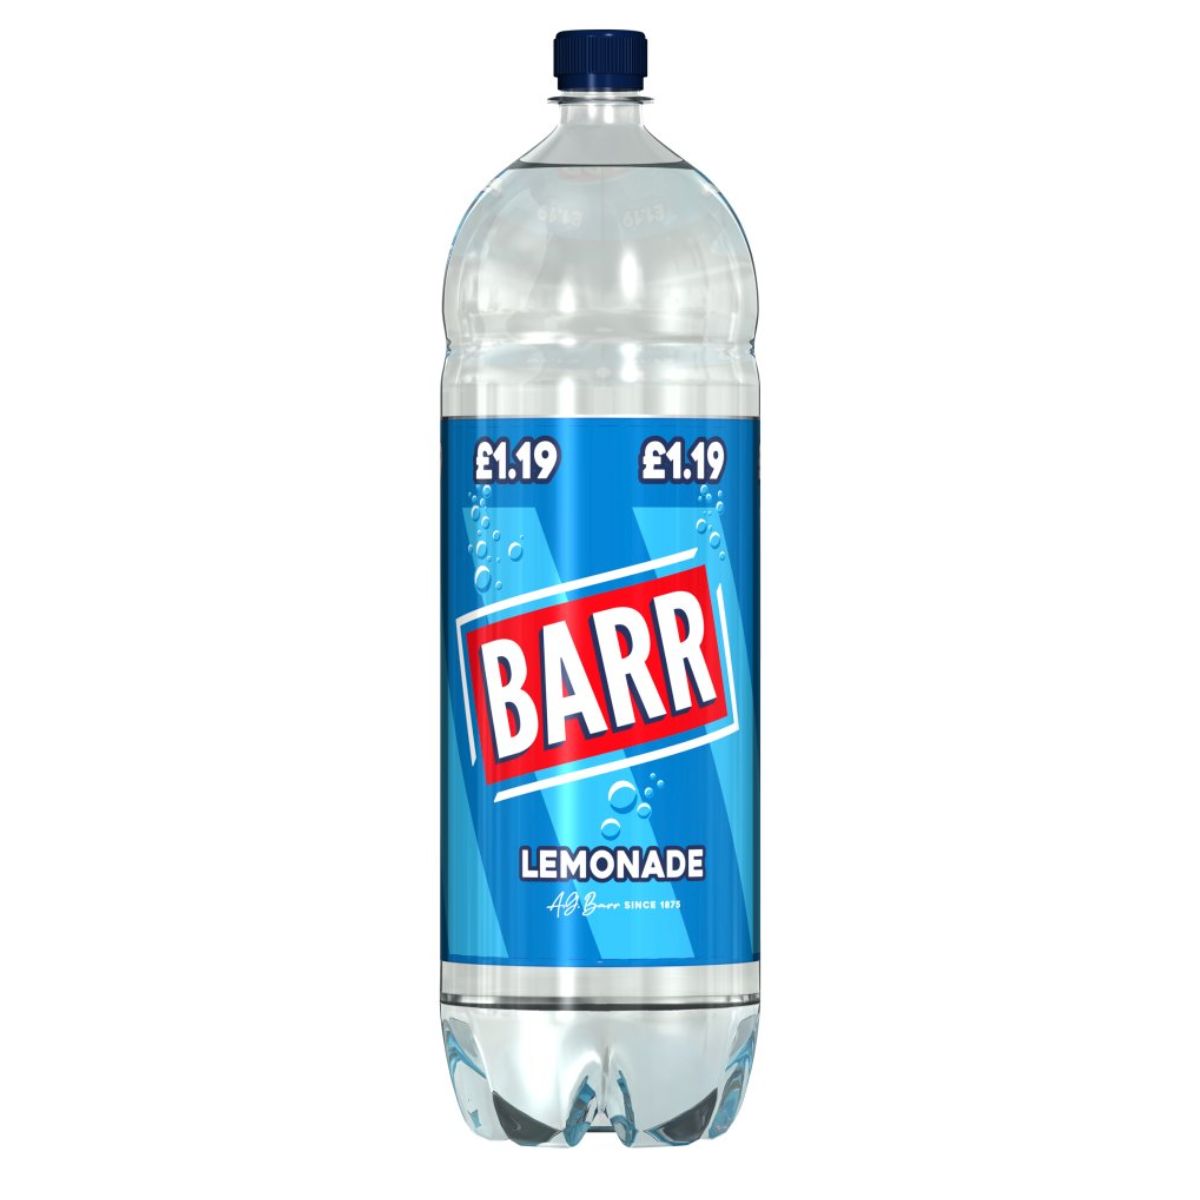 A bottle of Barr - Lemonade - 2L on a white background.